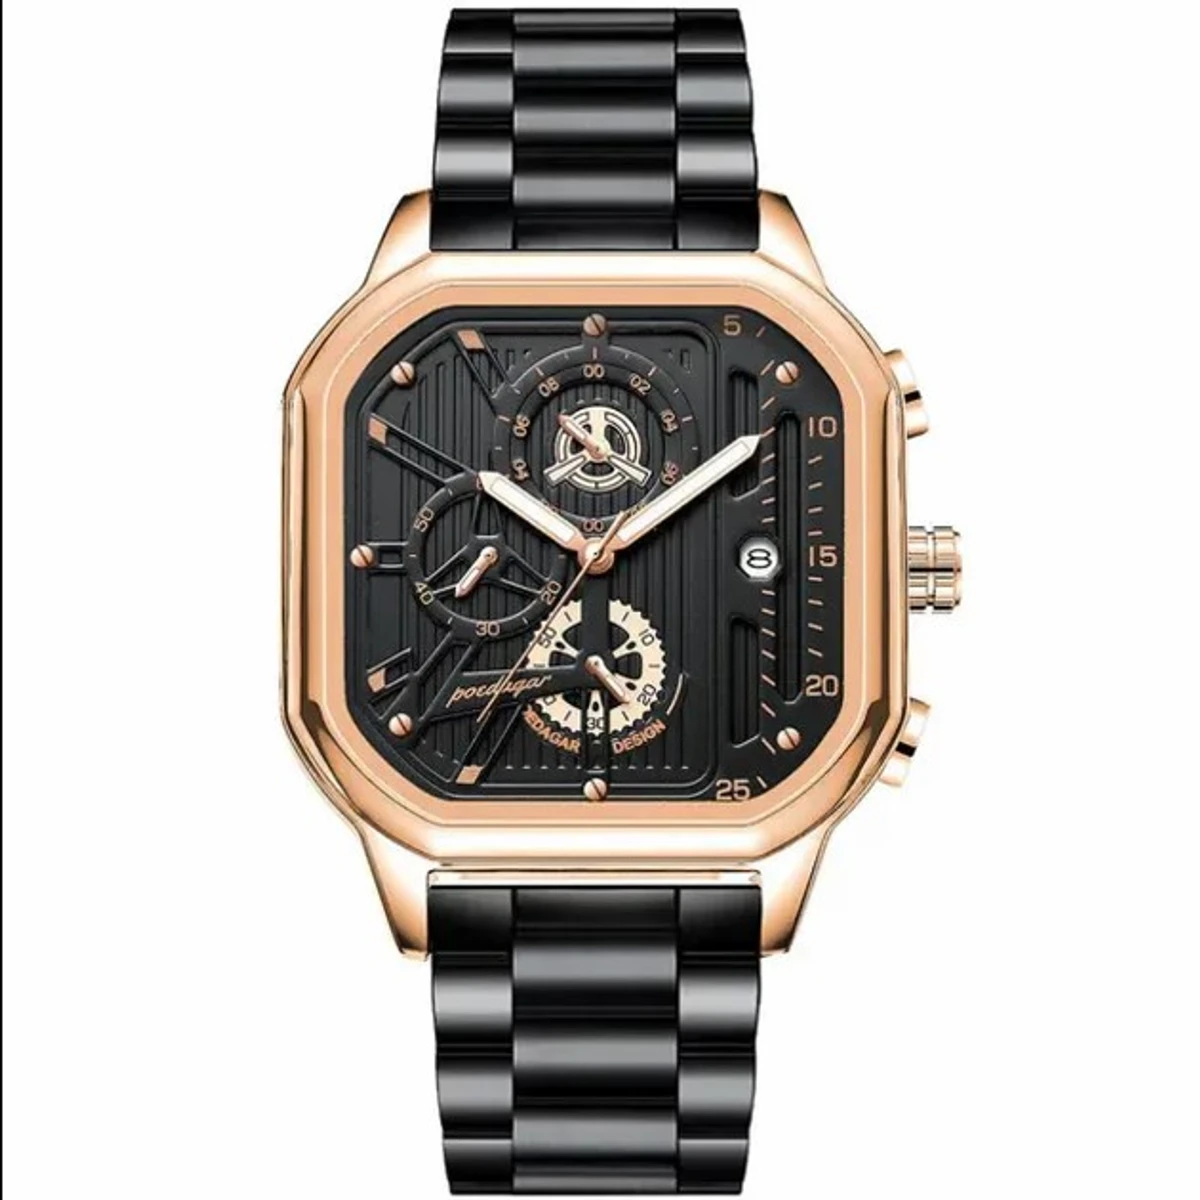 POEDAGAR 628 Luxury Casual Male Watch Fashion Chronograph Stainless Steel Waterproof Luminous Men's Wristwatches Gifts